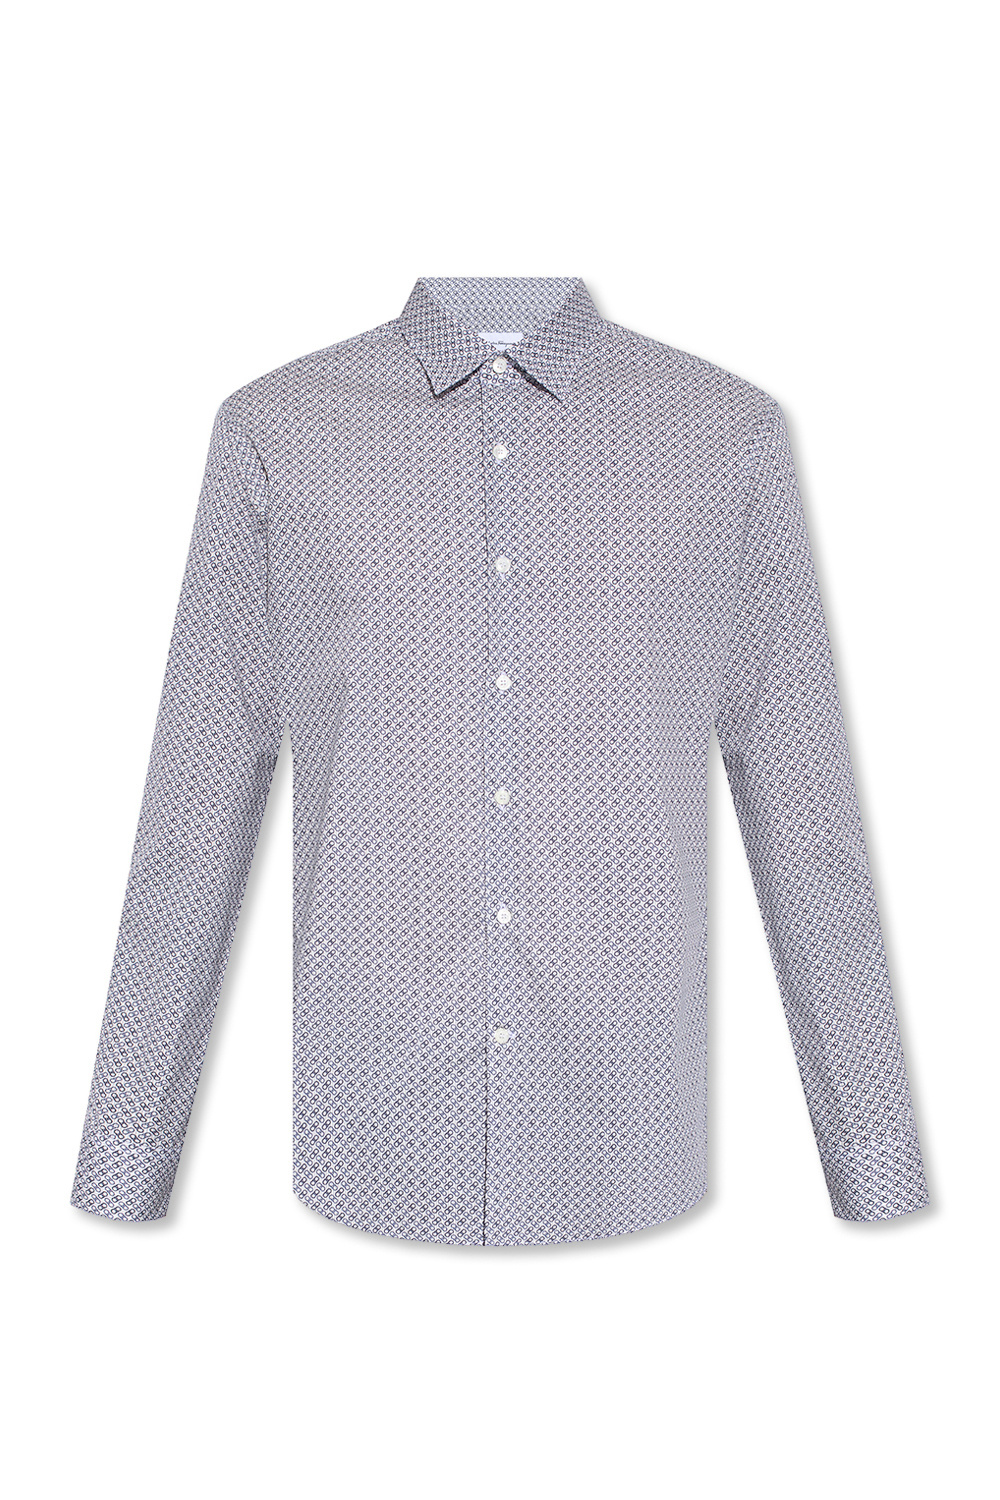 Salvatore Ferragamo Cotton shirt with ‘Gancini’ pattern